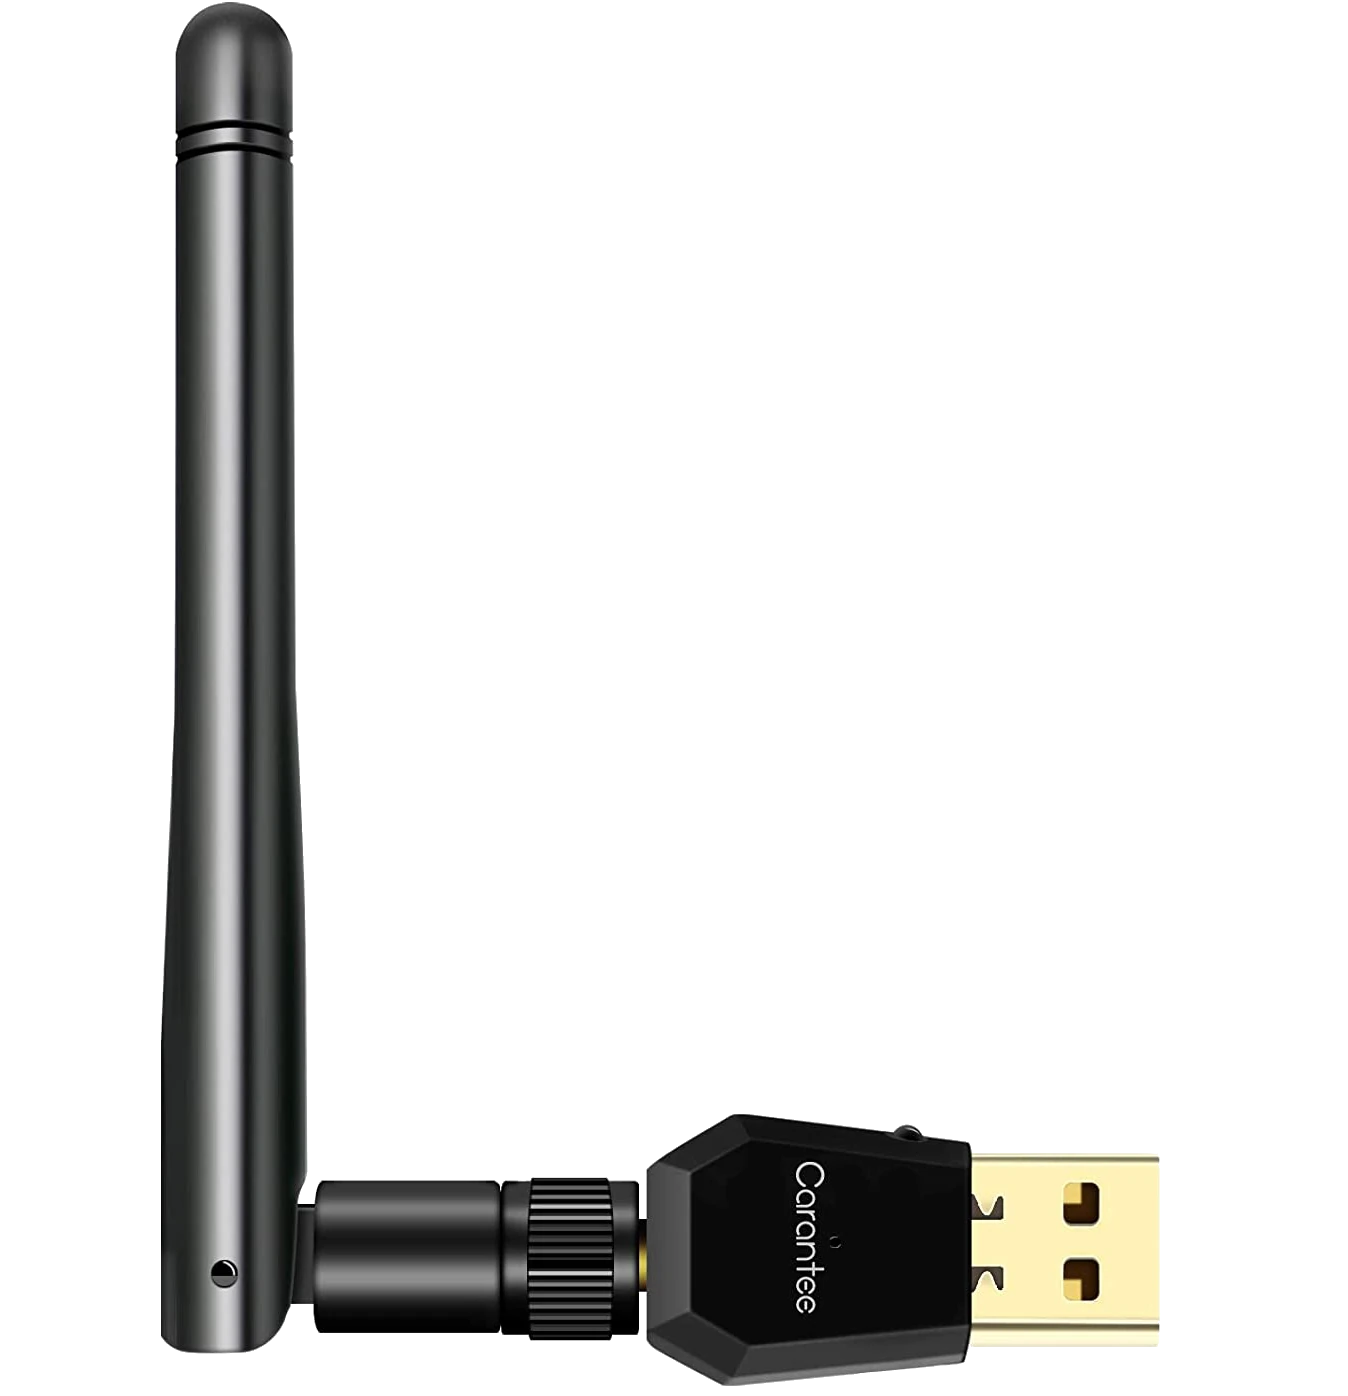 Realtek 802.11 n. Wireless USB Adapter 802.11AC nic. Драйвер 802.11AC nic. Dual Band USB Adapter ac1300 драйвер. \ 802.11AC Bluetooth драйвер.